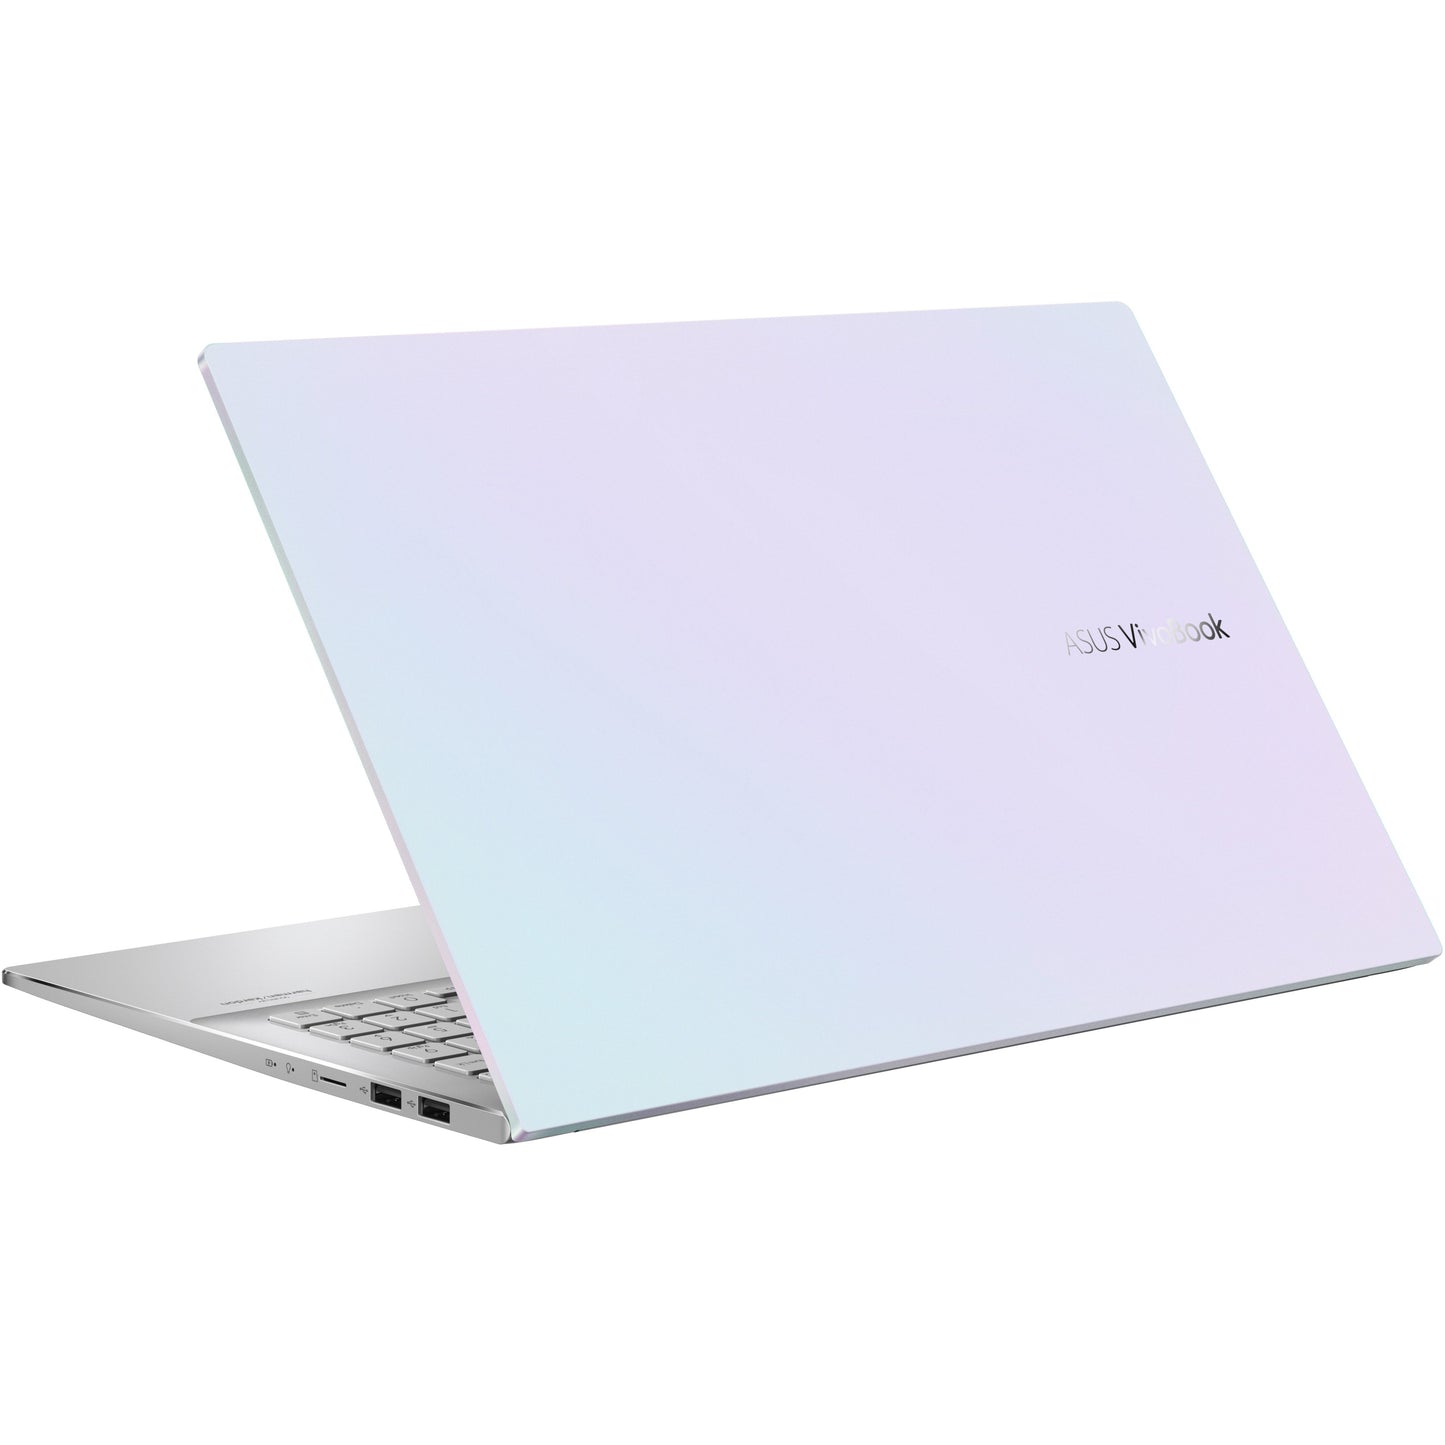 Asus VivoBook S15 S533 S533EA-DH51-WH 15.6" Notebook - Full HD - 1920 x 1080 - Intel Core i5 11th Gen i5-1135G7 Quad-core (4 Core) 2.40 GHz - 8 GB Total RAM - 512 GB SSD - Dreamy White Transparent Silver